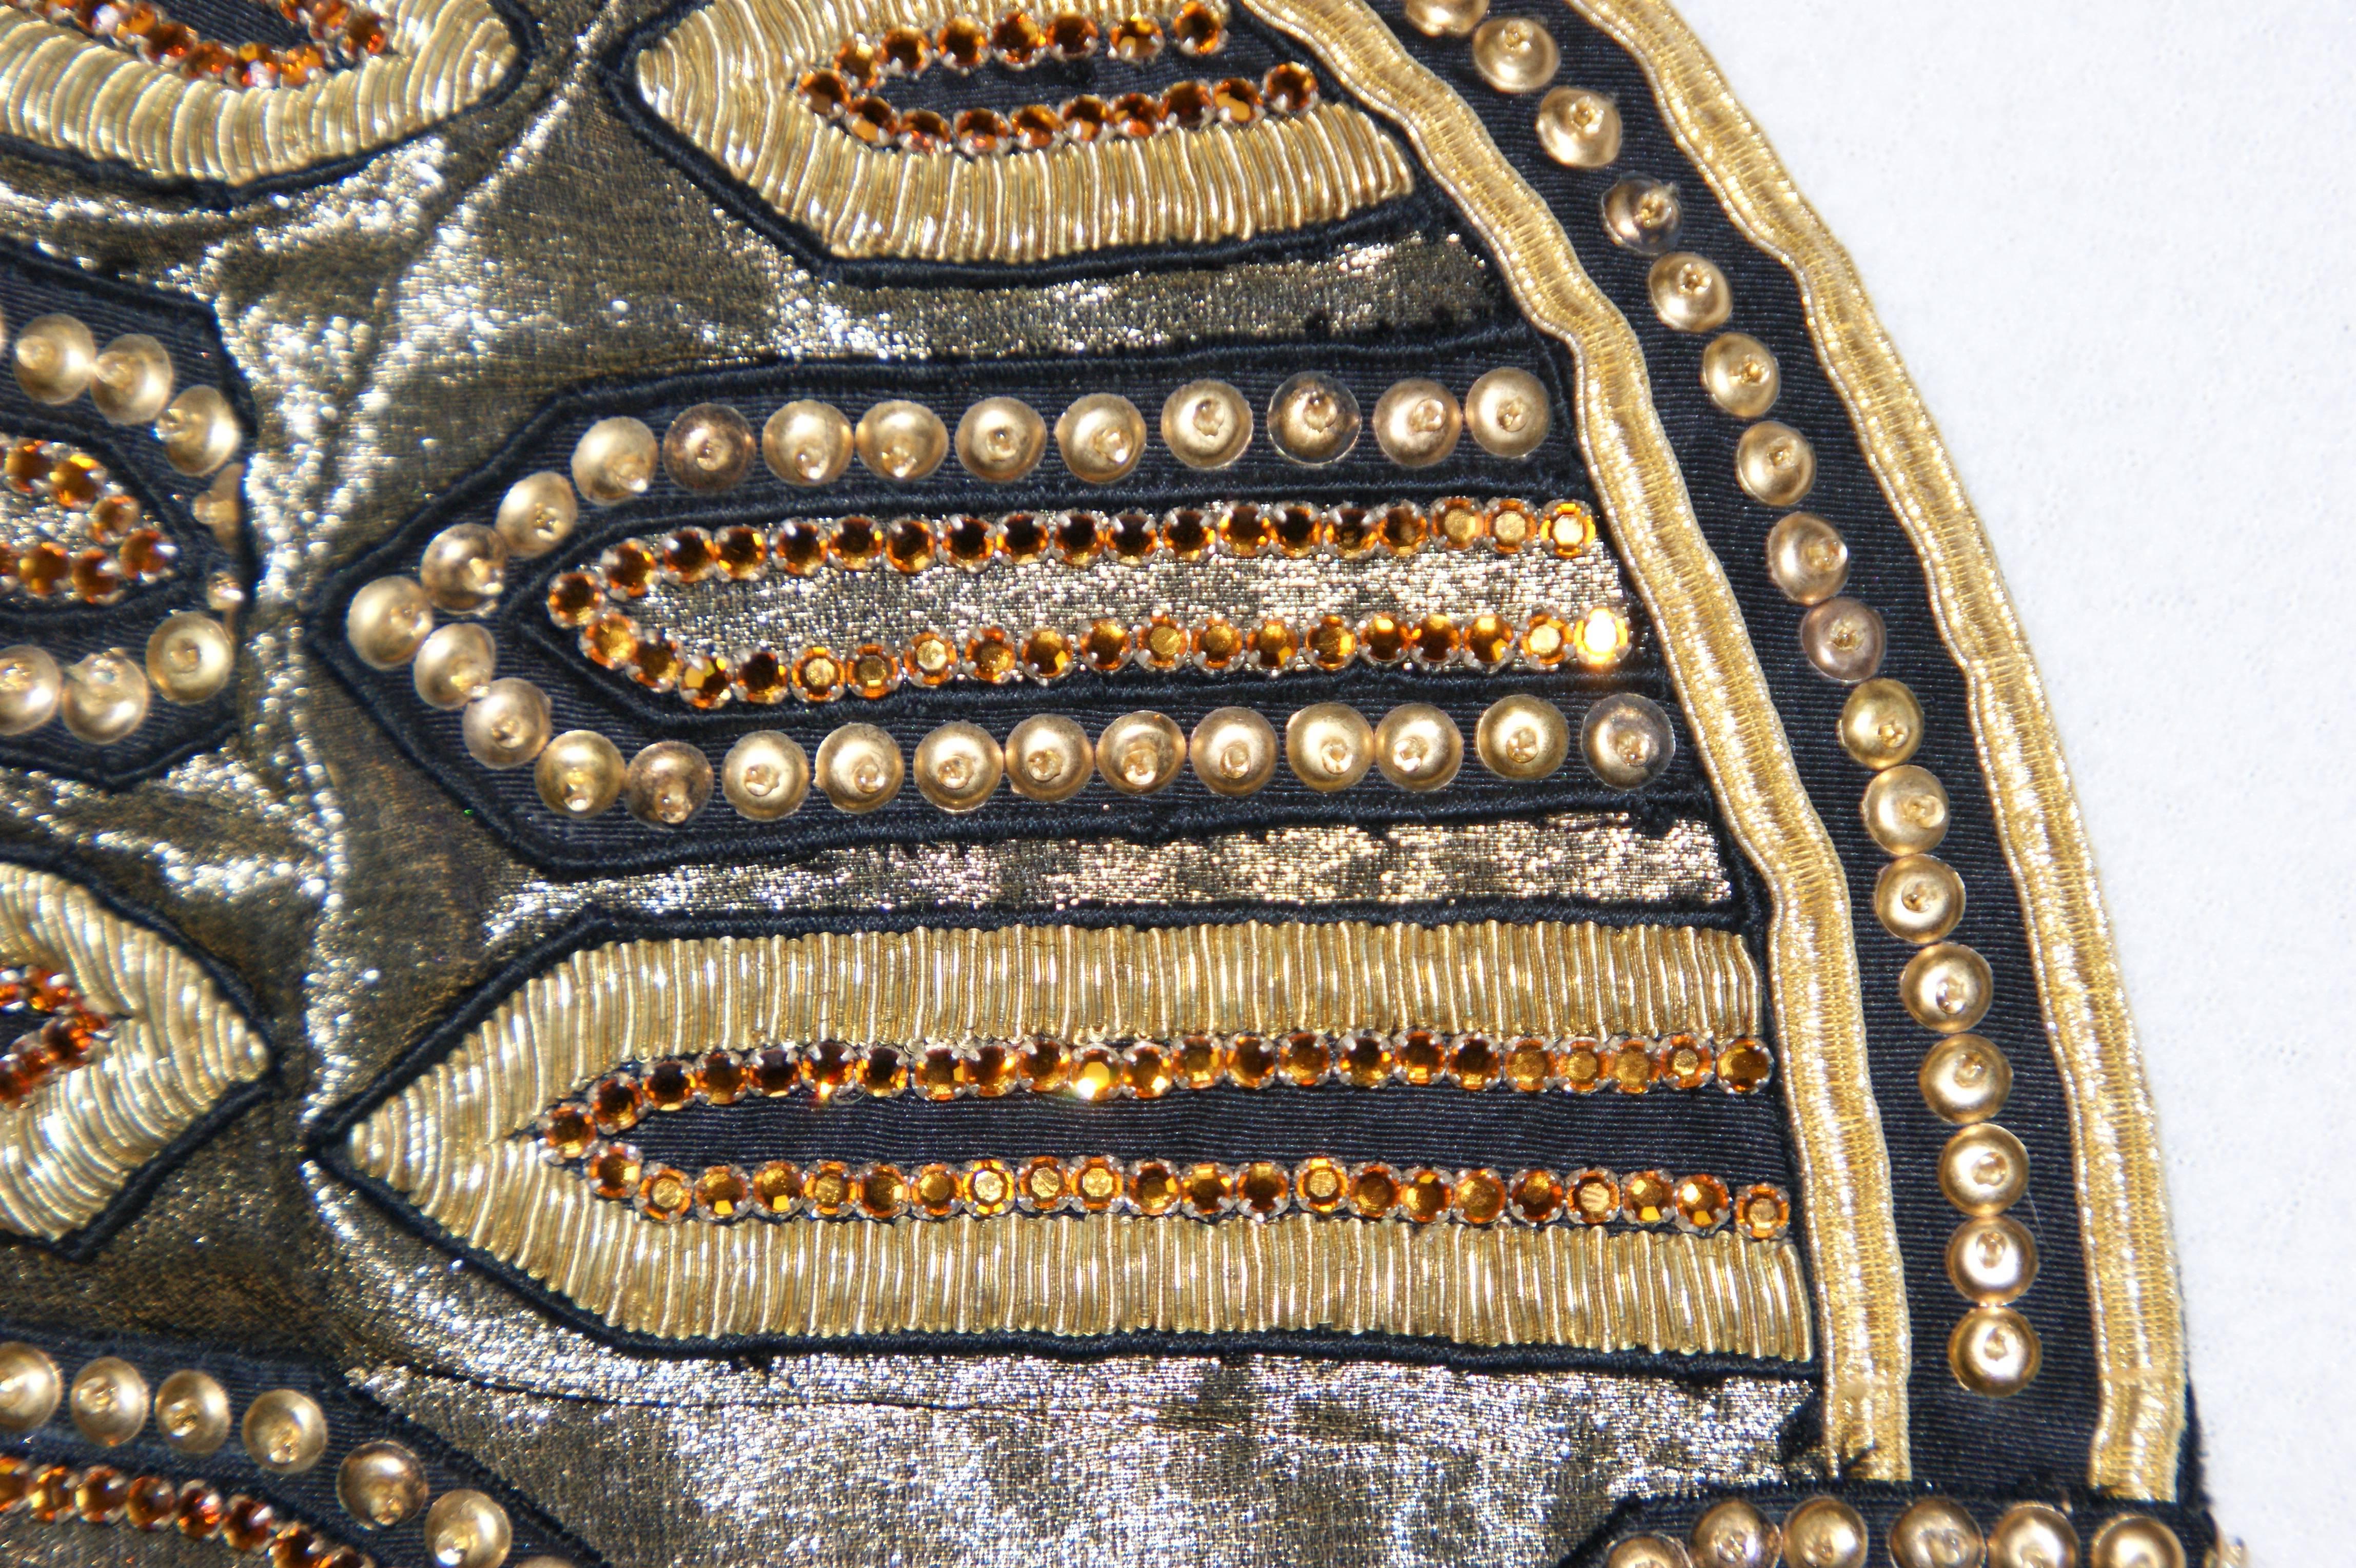 Brown S/S 1992 Gianni Versace Runway Gold Crystal Embellished Crop Top Bustier